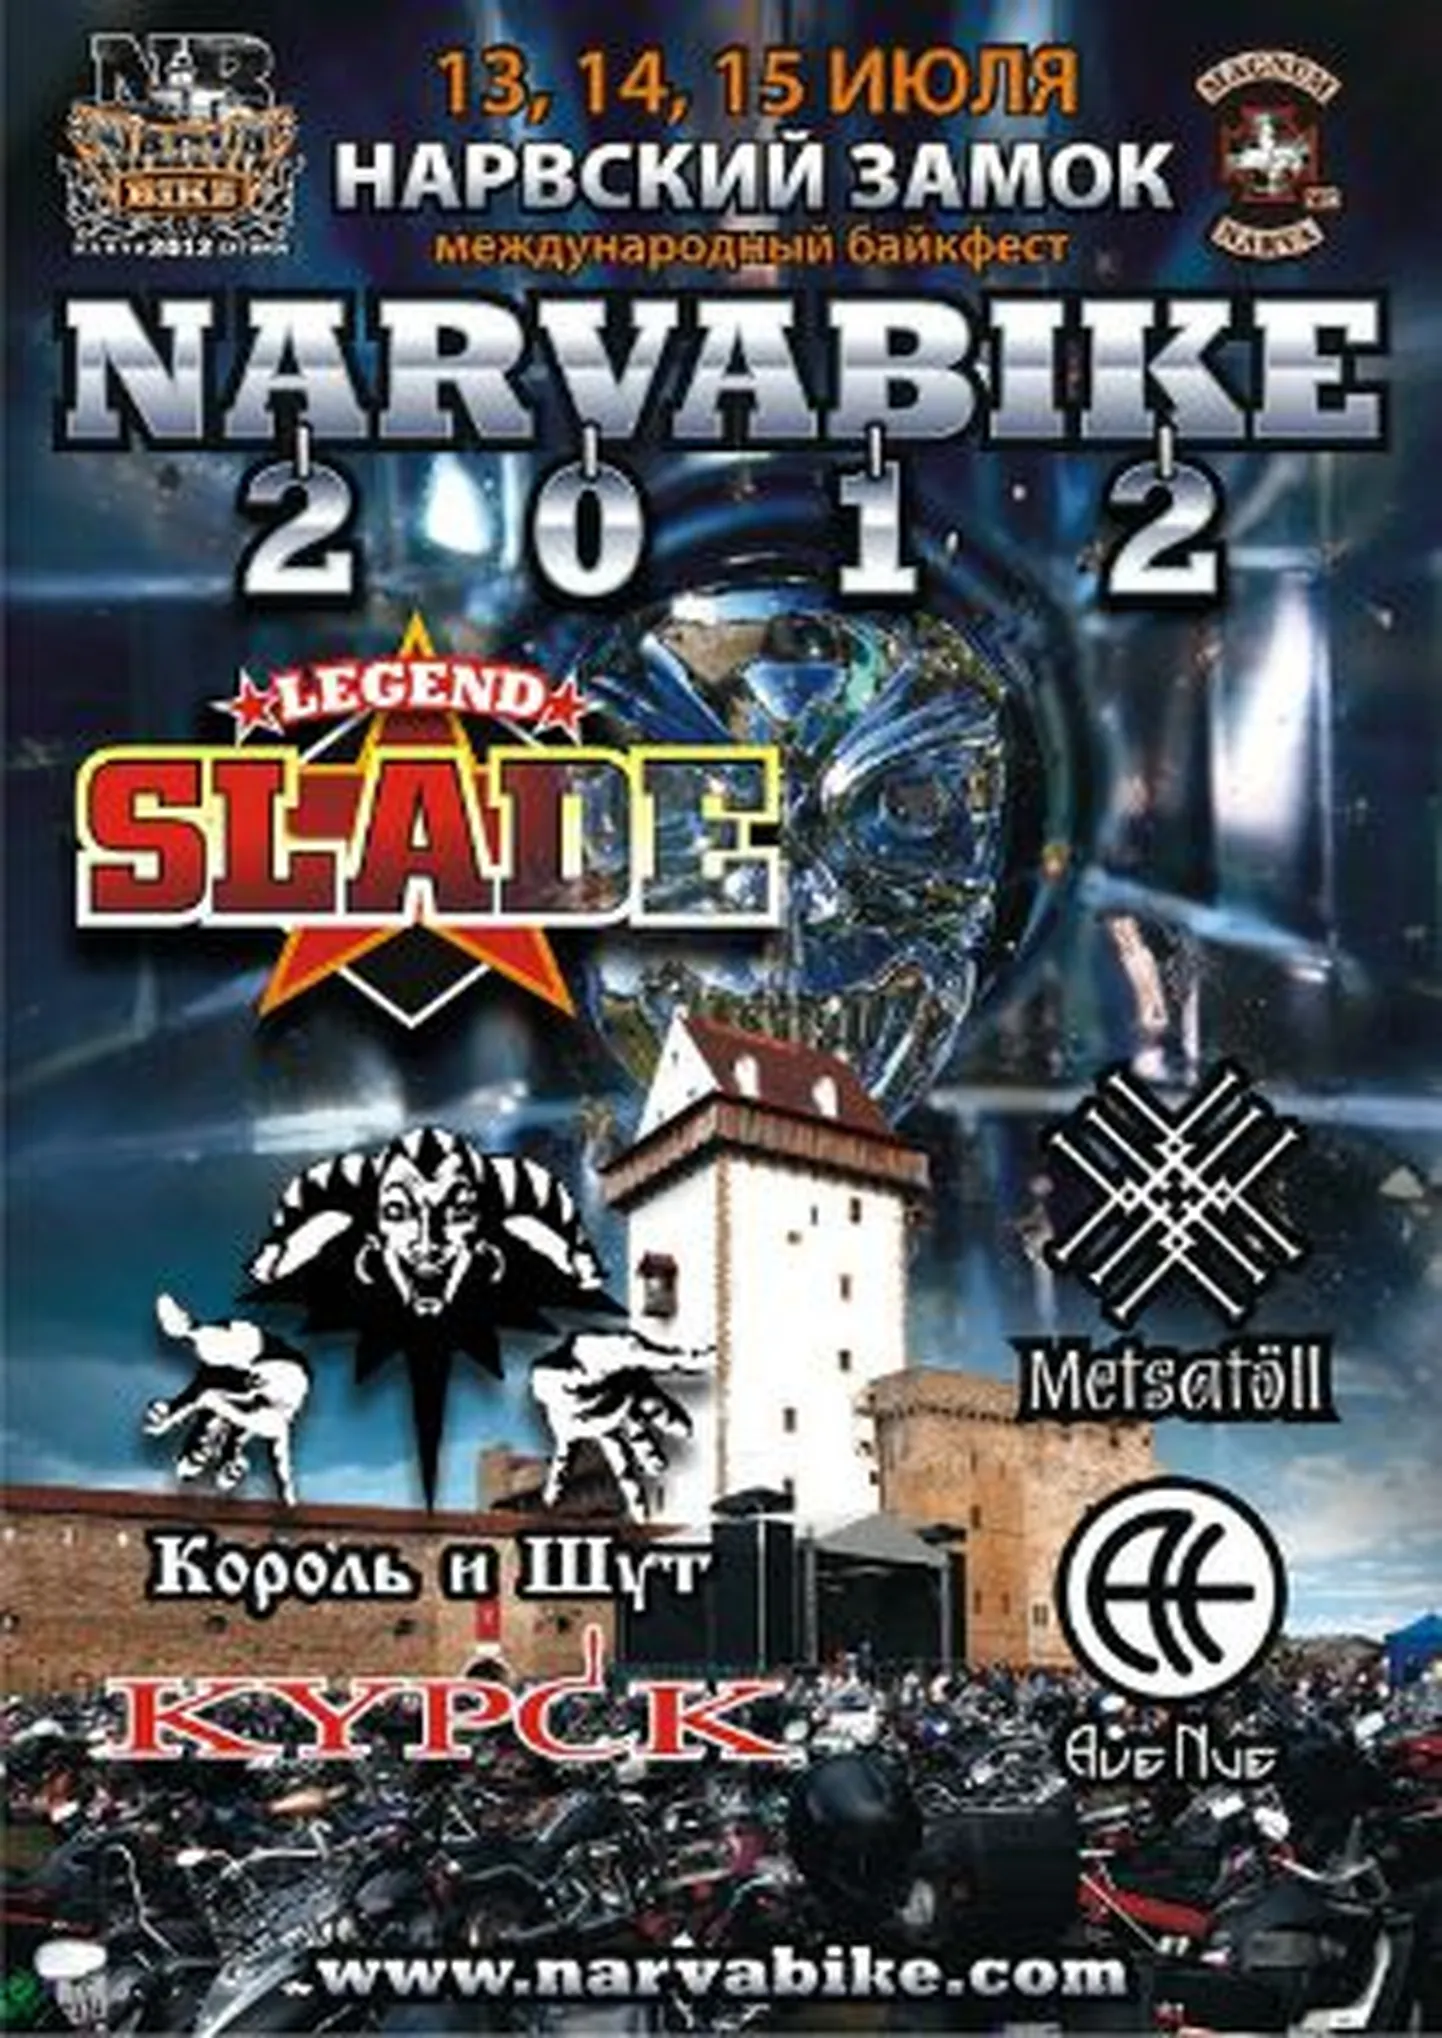 Афиша Narva Bike-2012